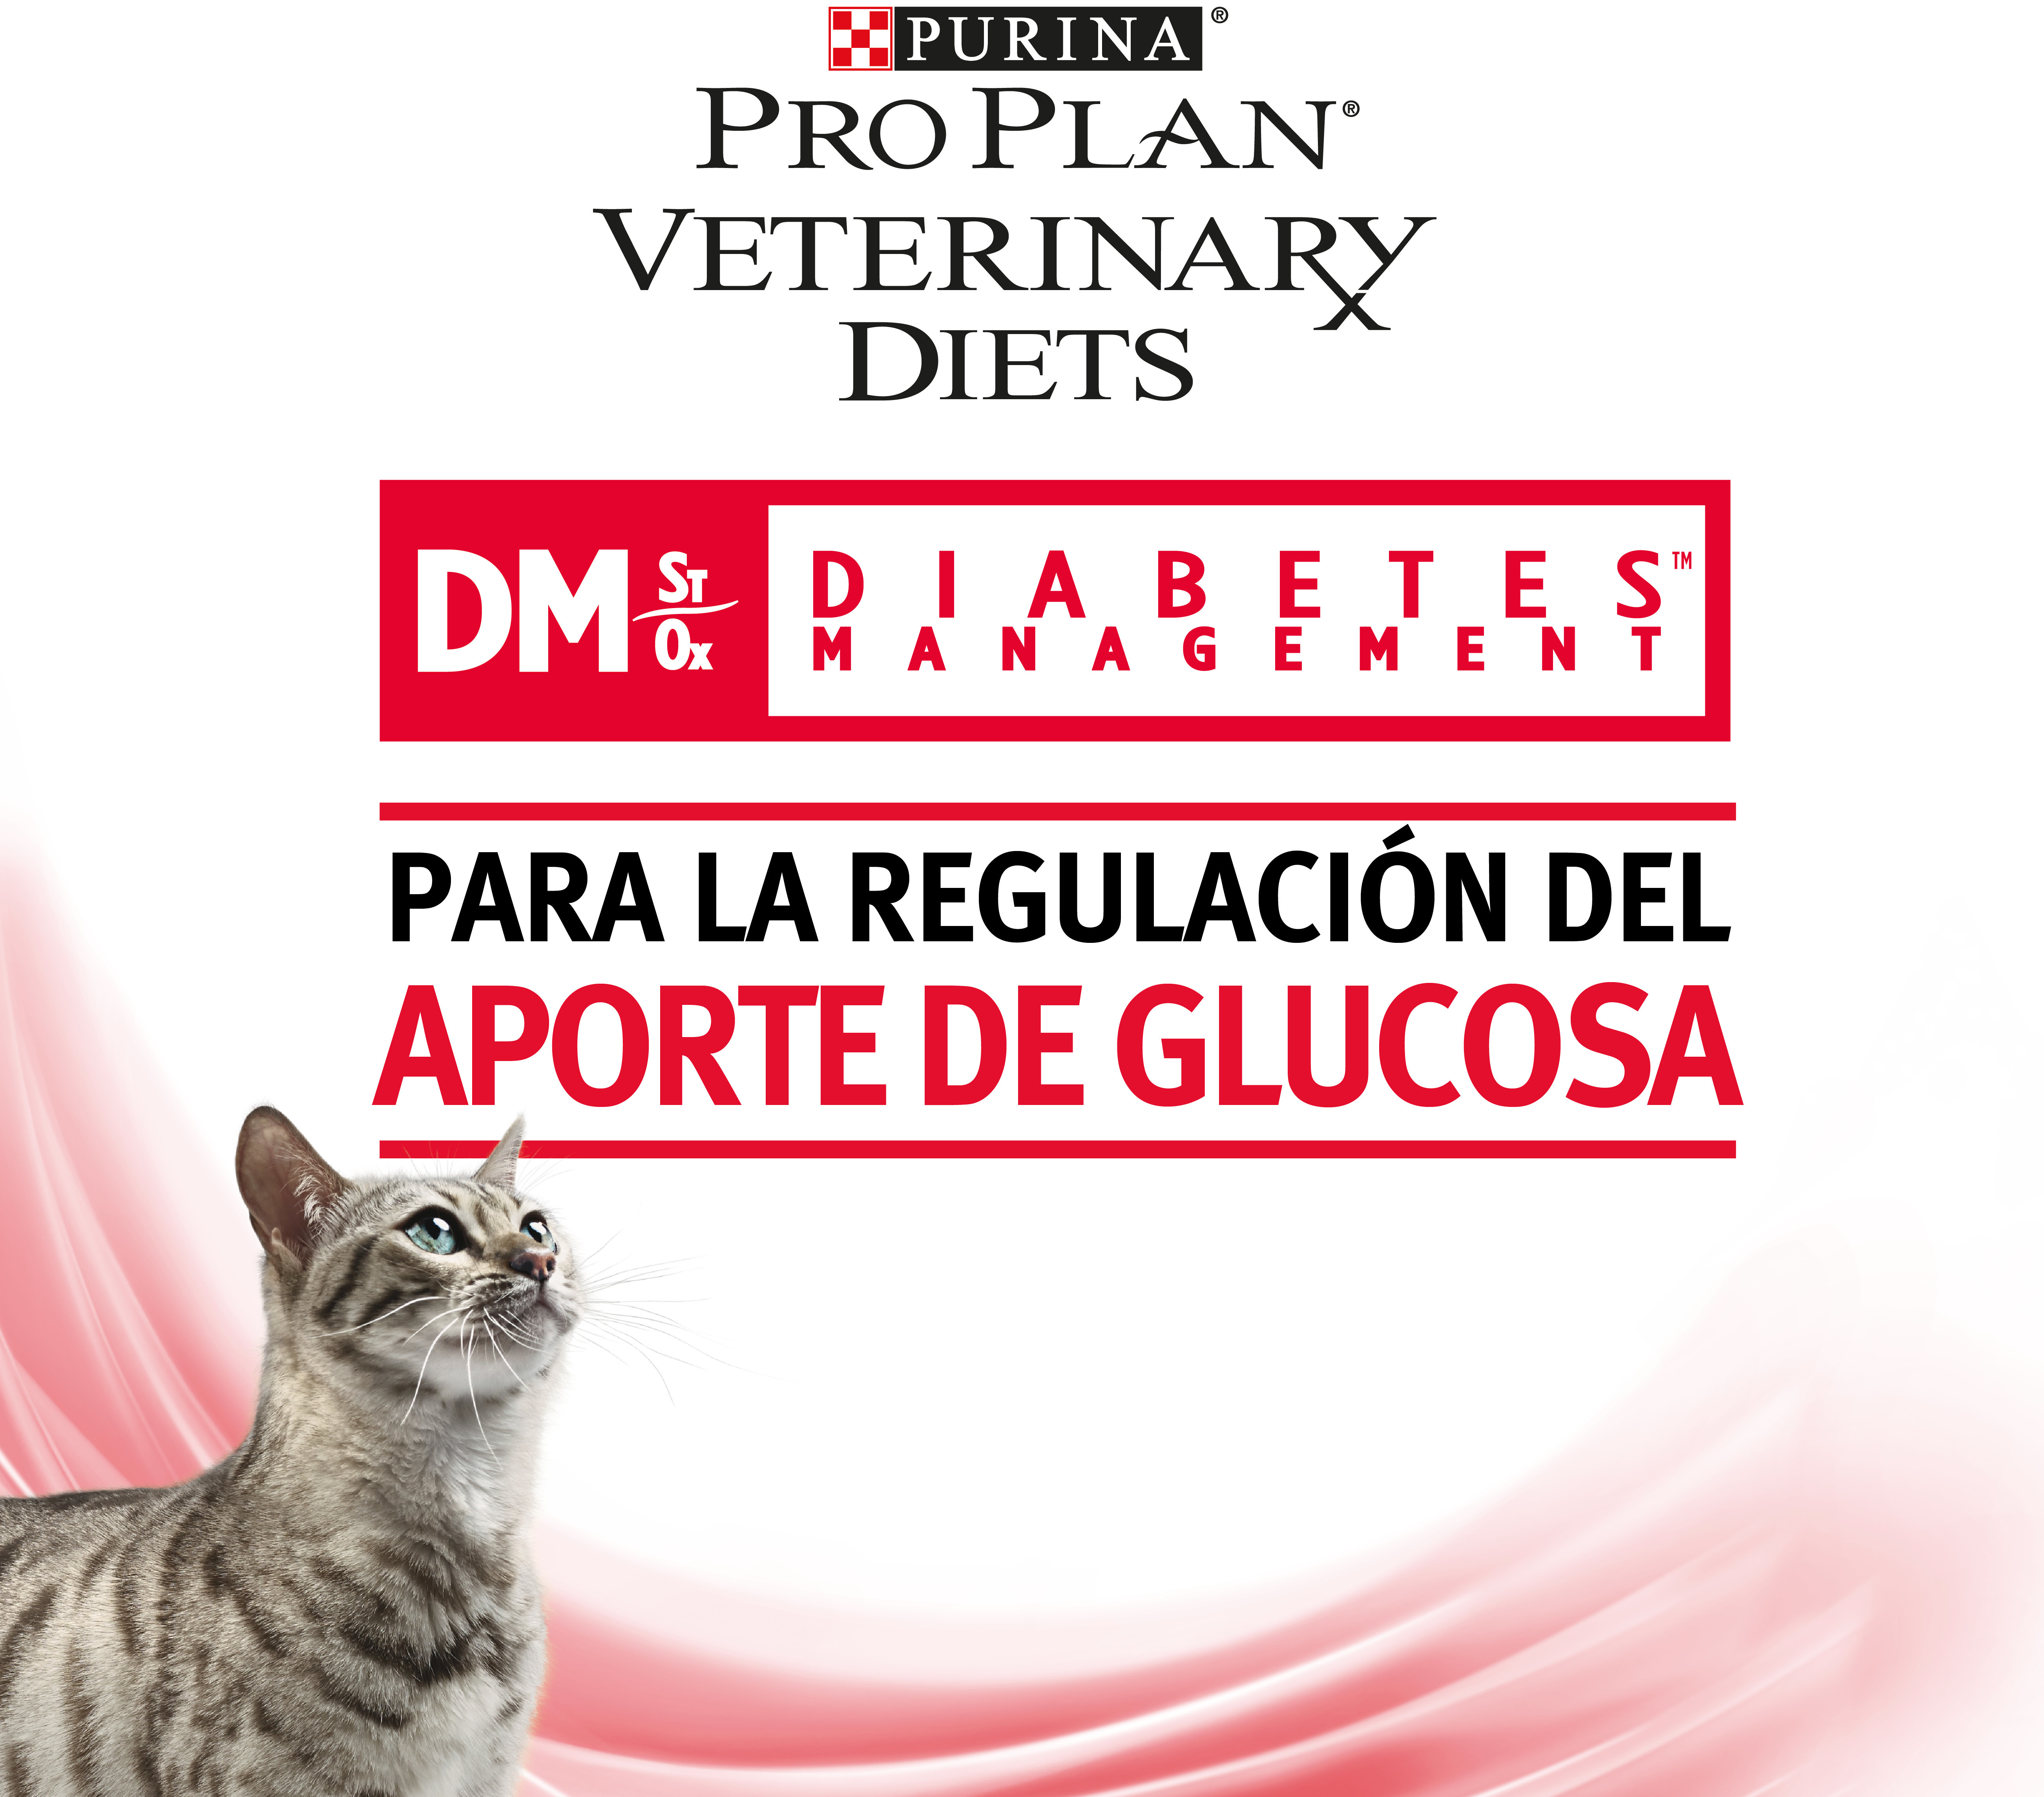 Pro Plan Veterinary Diets Islak G?da Kedi Dm Diyabet